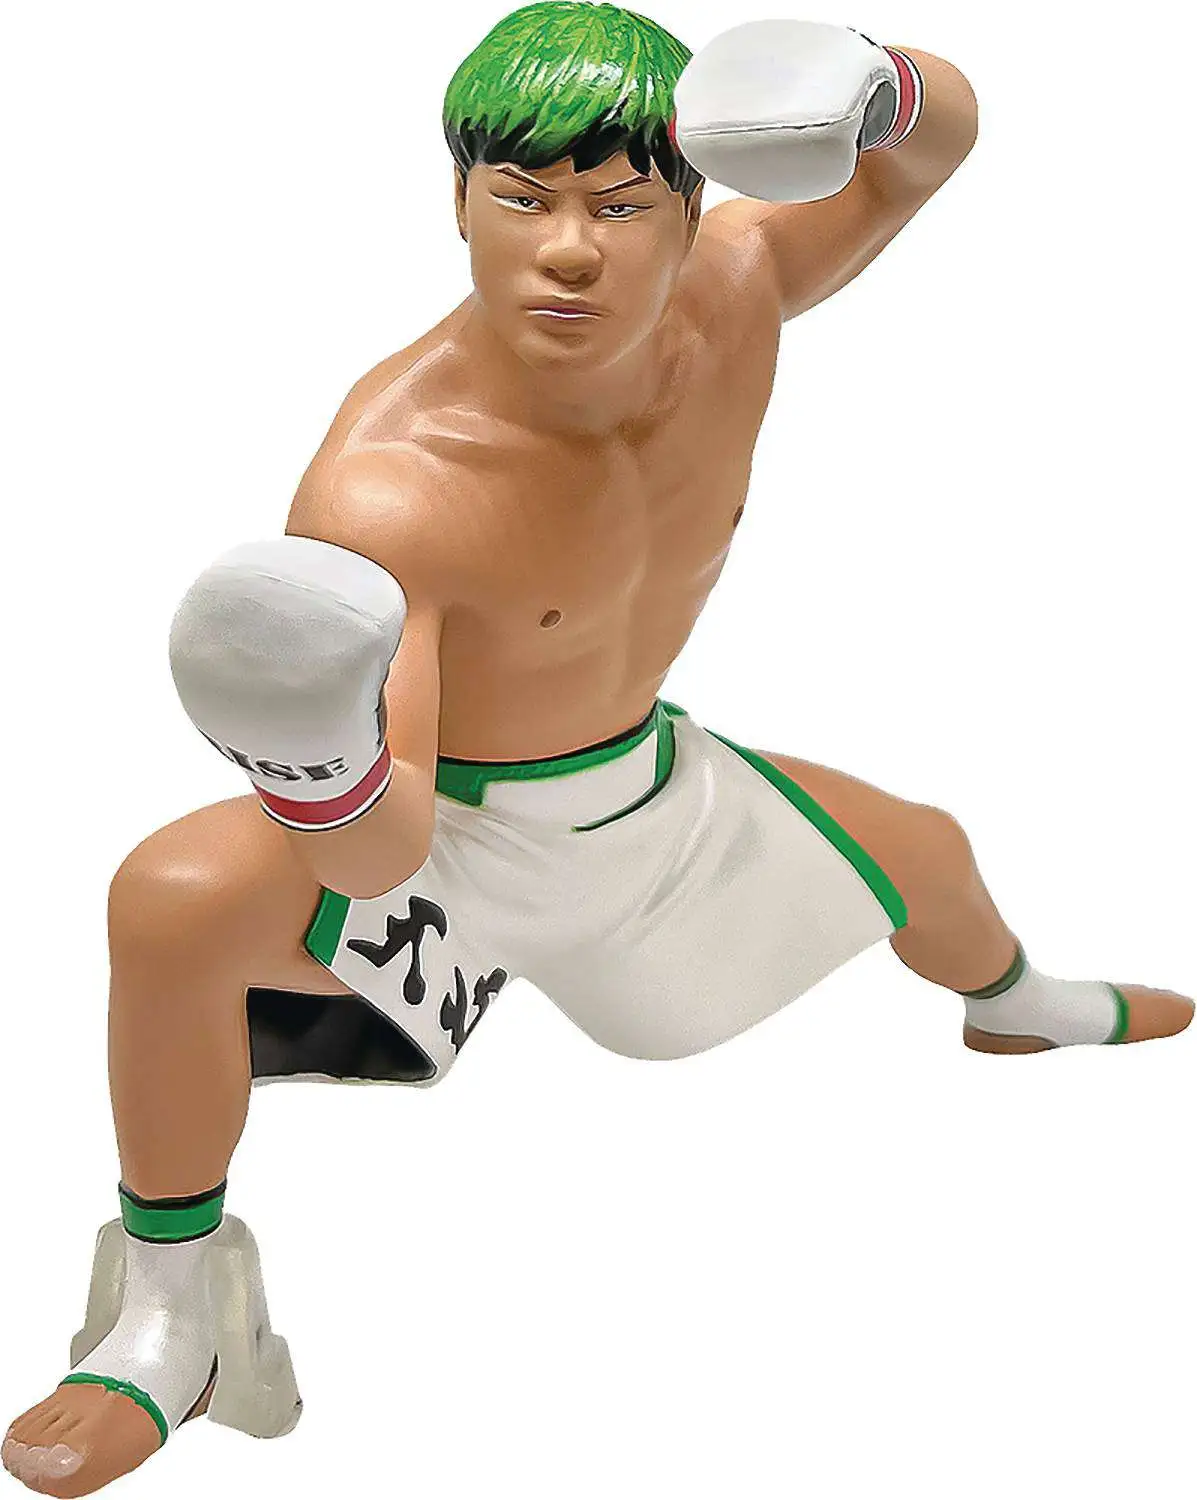 Kickboxing Tenshin Nasukawa 5-Inch Vinyl Figure (Pre-Order ships April)